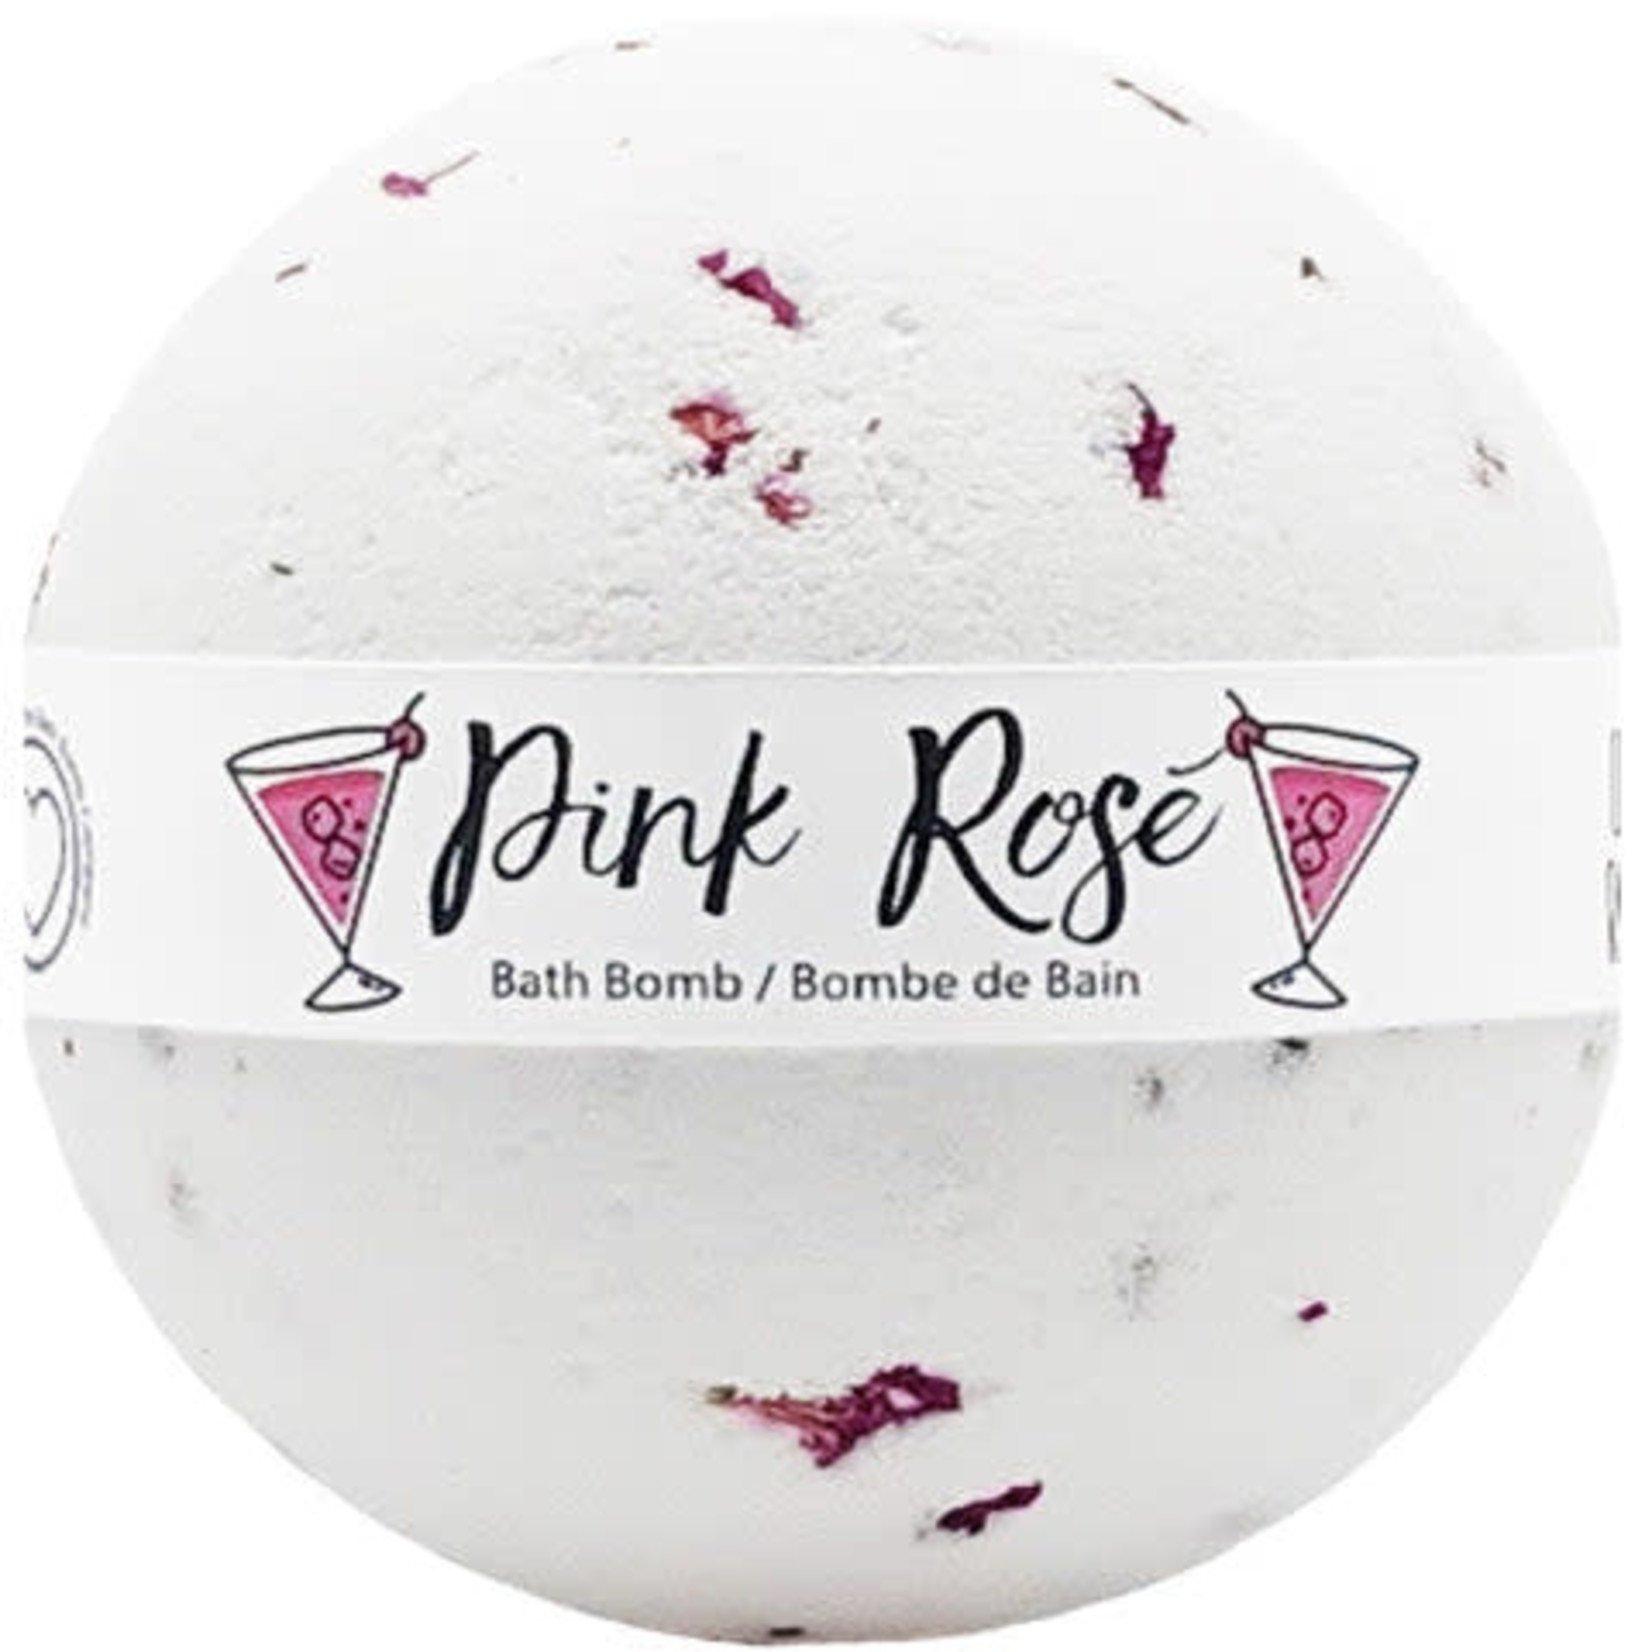 The Bath Bomb Pink Rose' Bath Bomb